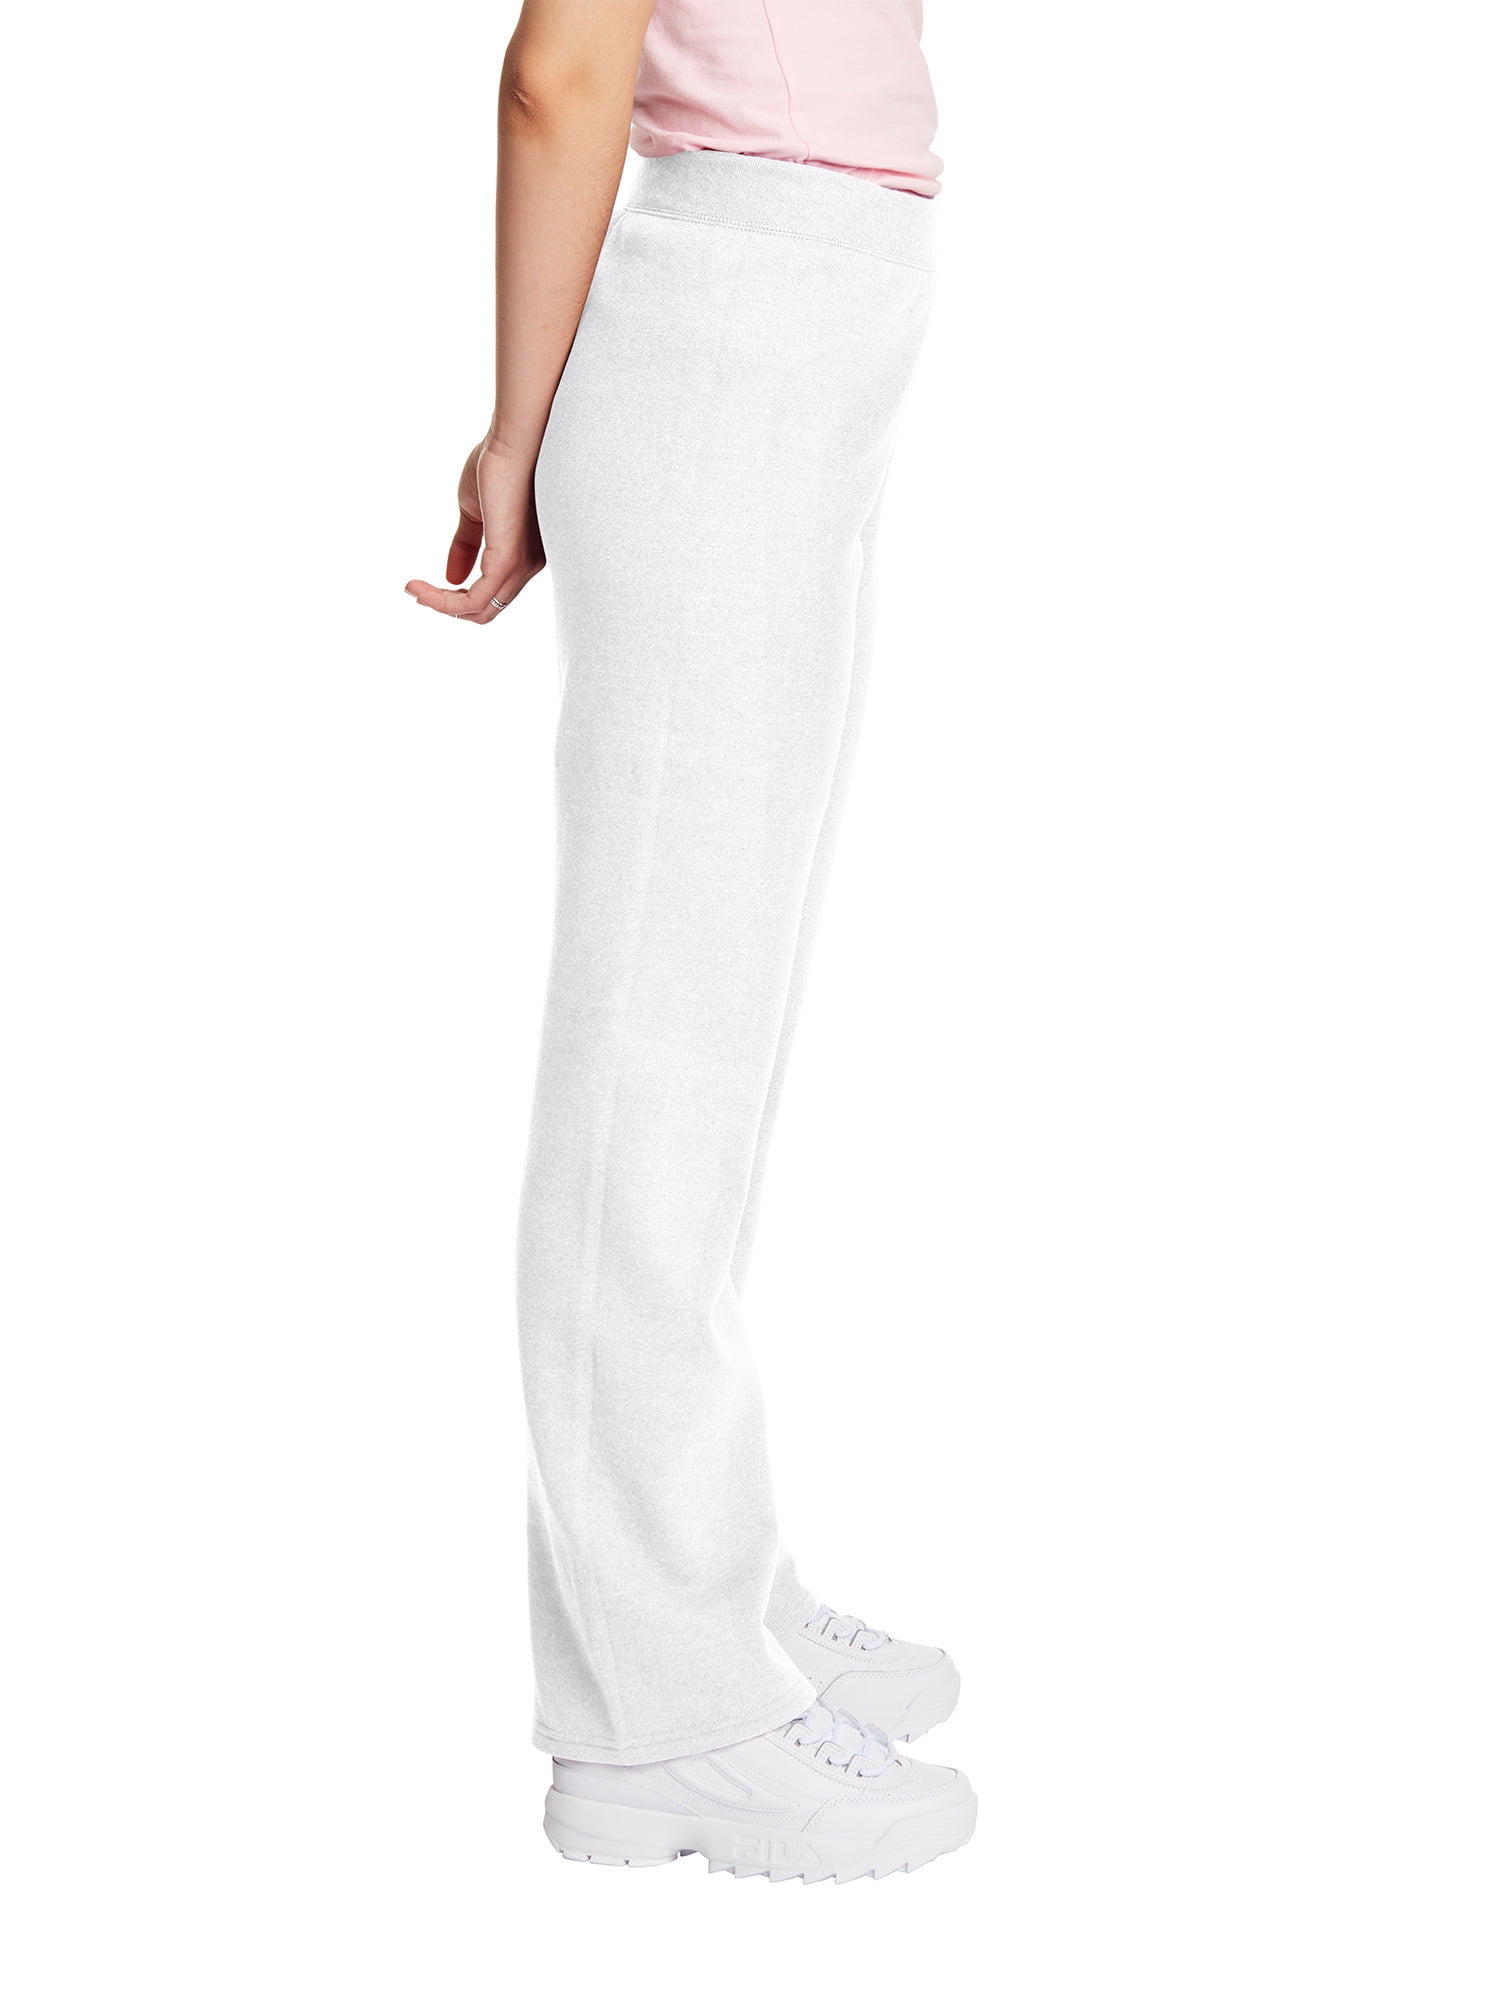 Hanes ComfortSoft EcoSmart Women's Open Bottom Fleece Sweatpants, Sizes S- XXL and Petite 